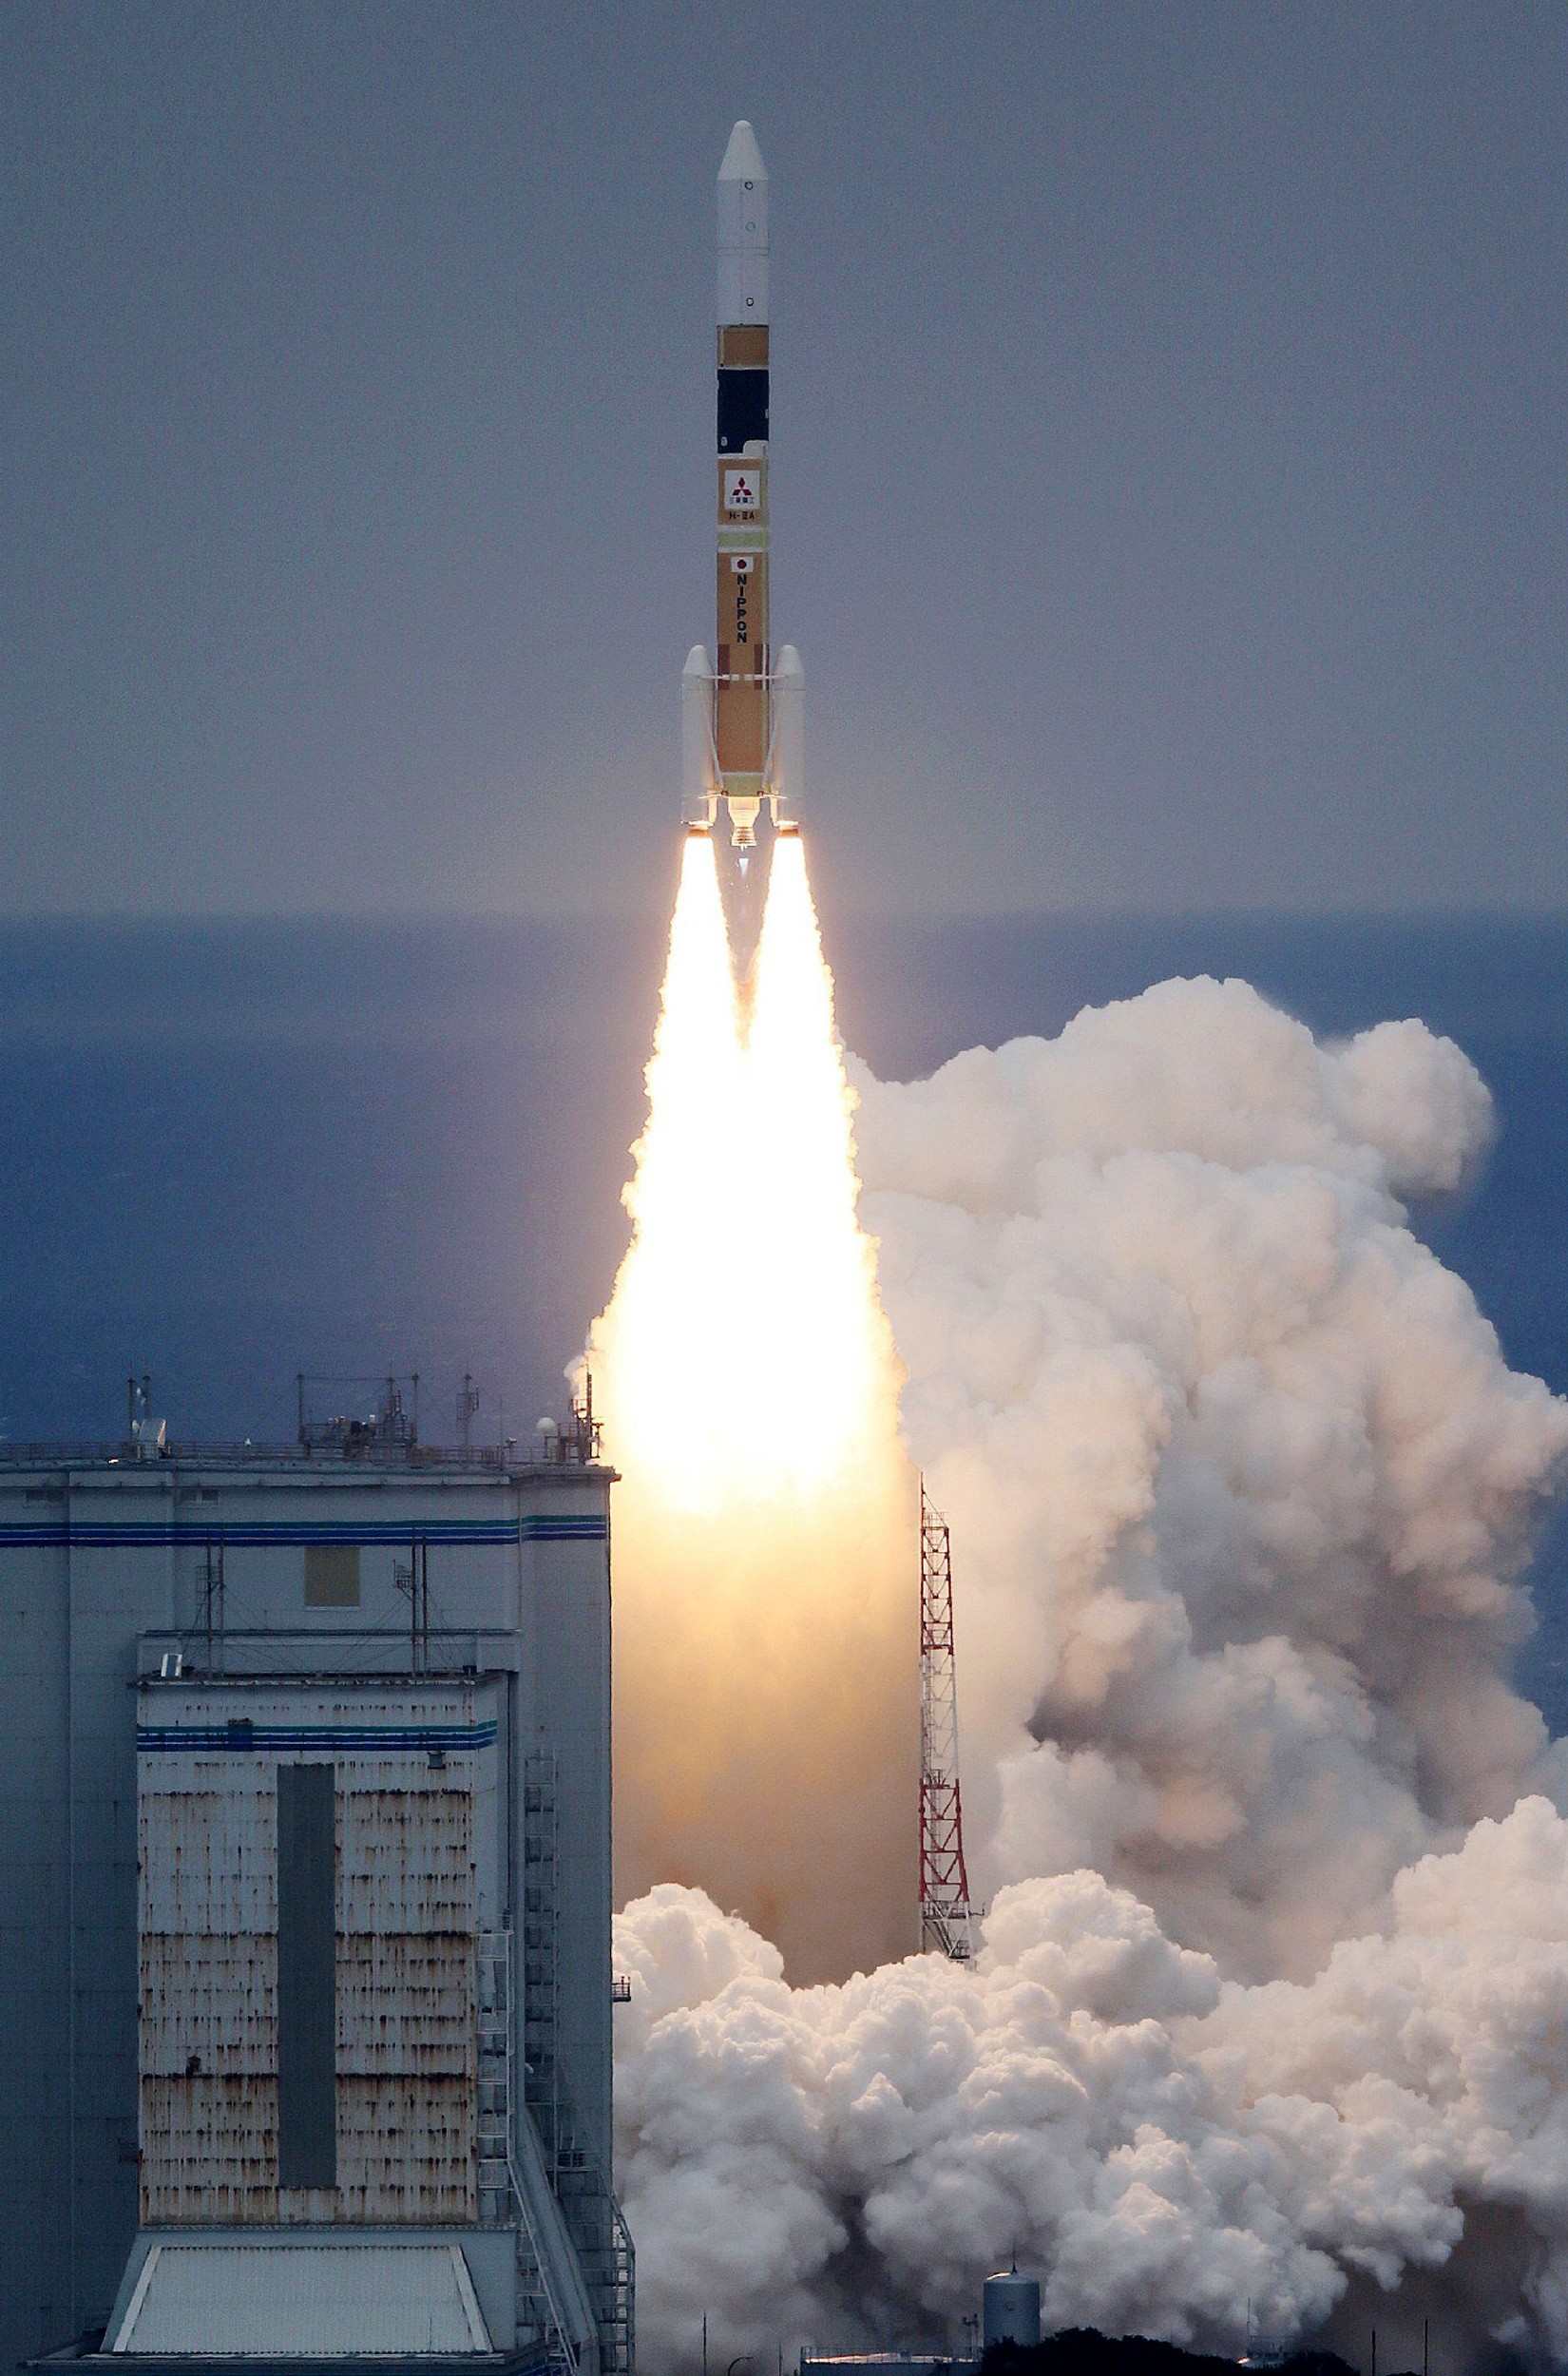 Foguete japonês é lançado com dois satélites (Foto: JIJI PRESS / AFP)